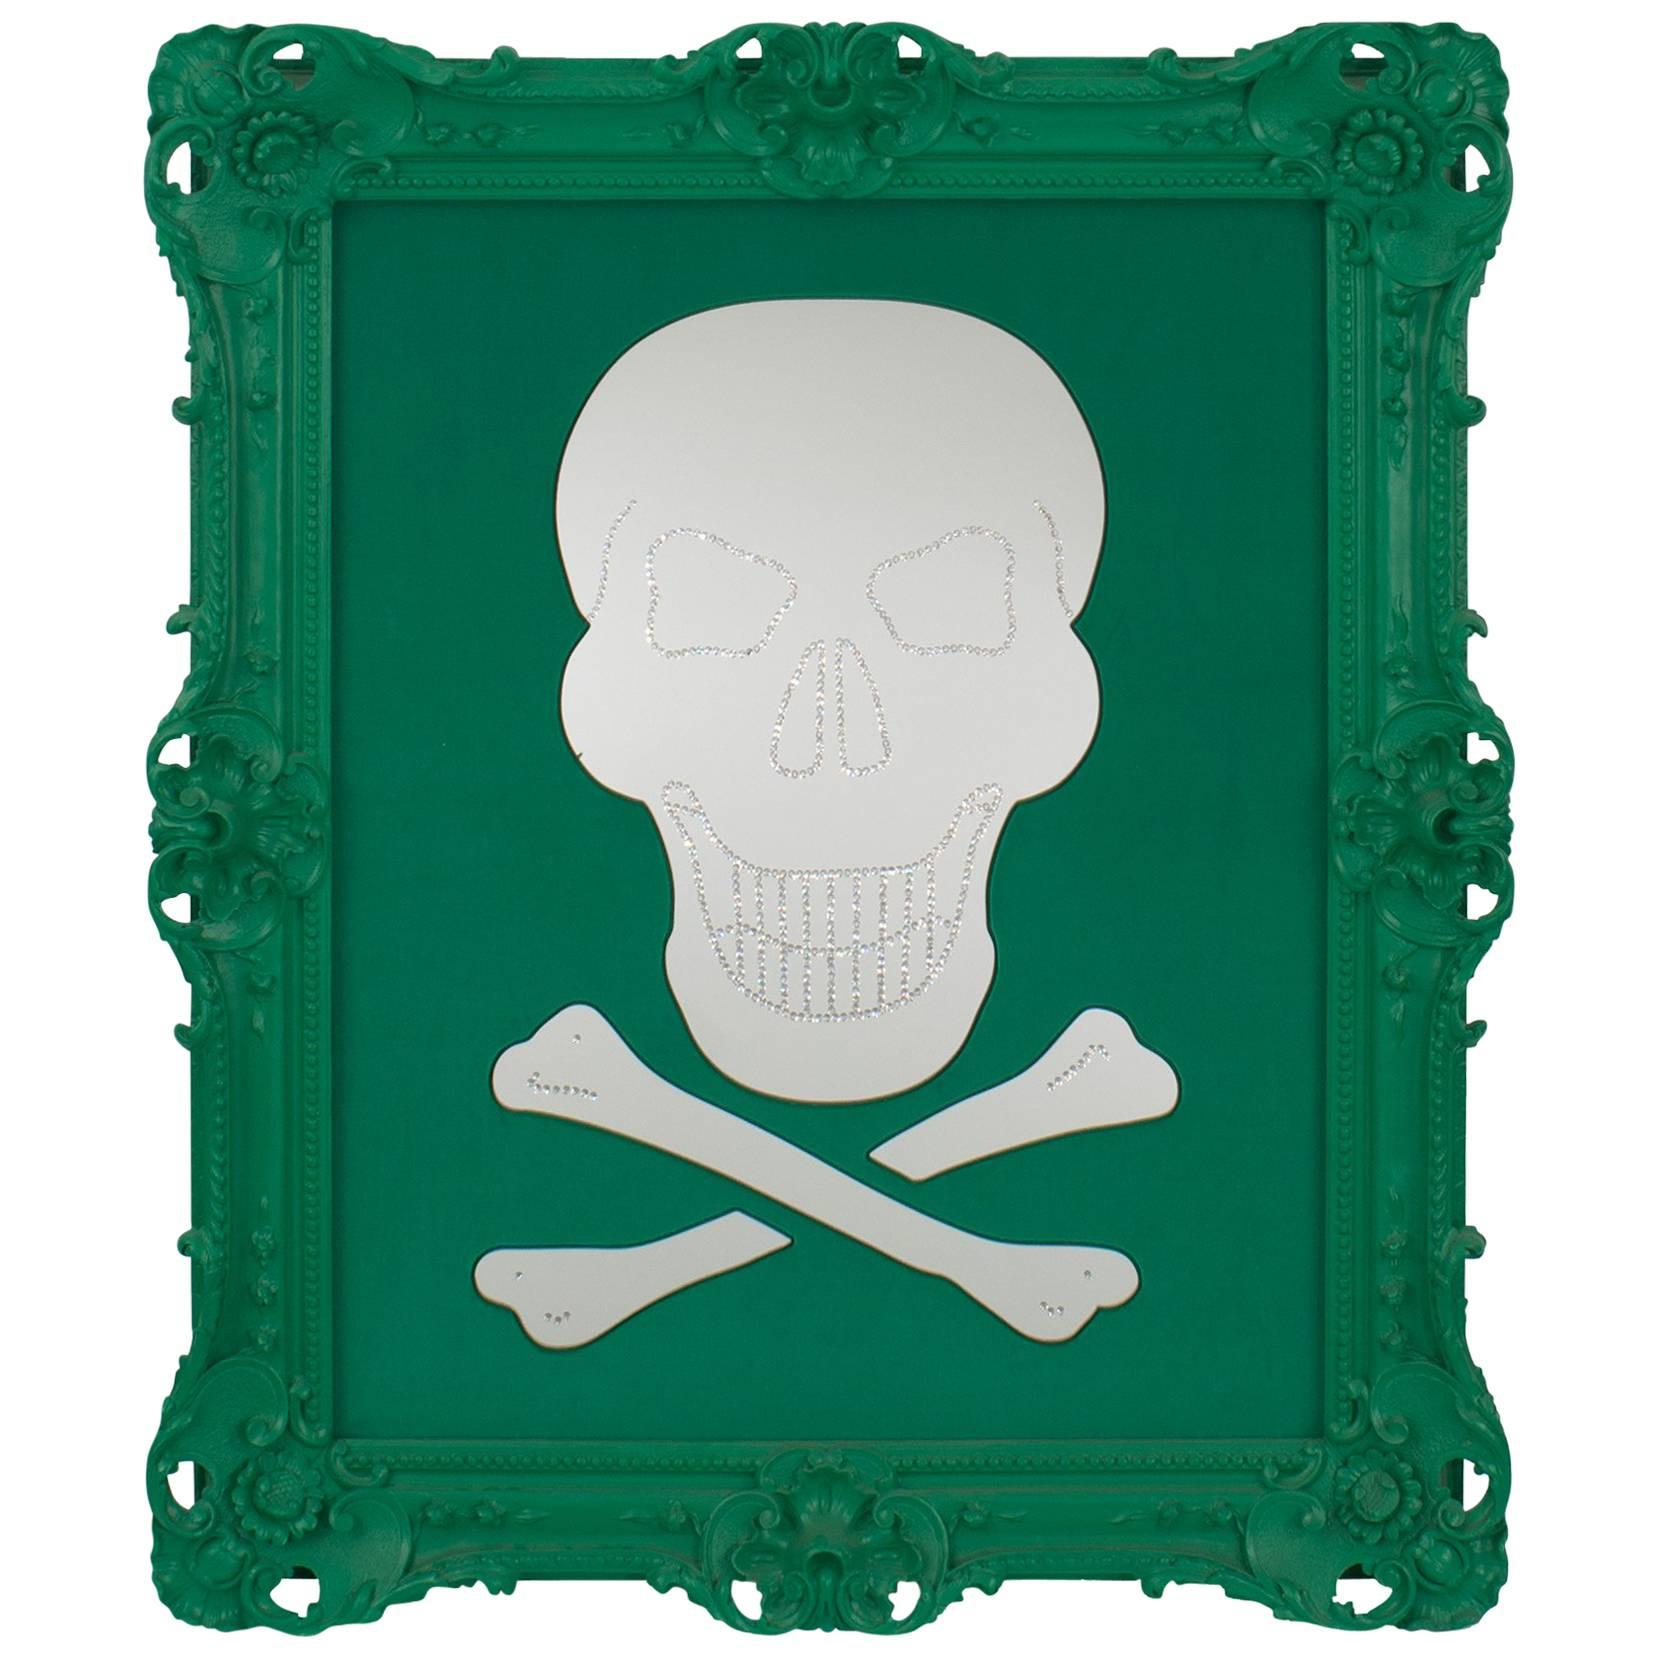 Miroir moderne de Geoffrey Bradfield à cadre en filigrane vert avec crâne et os croisés